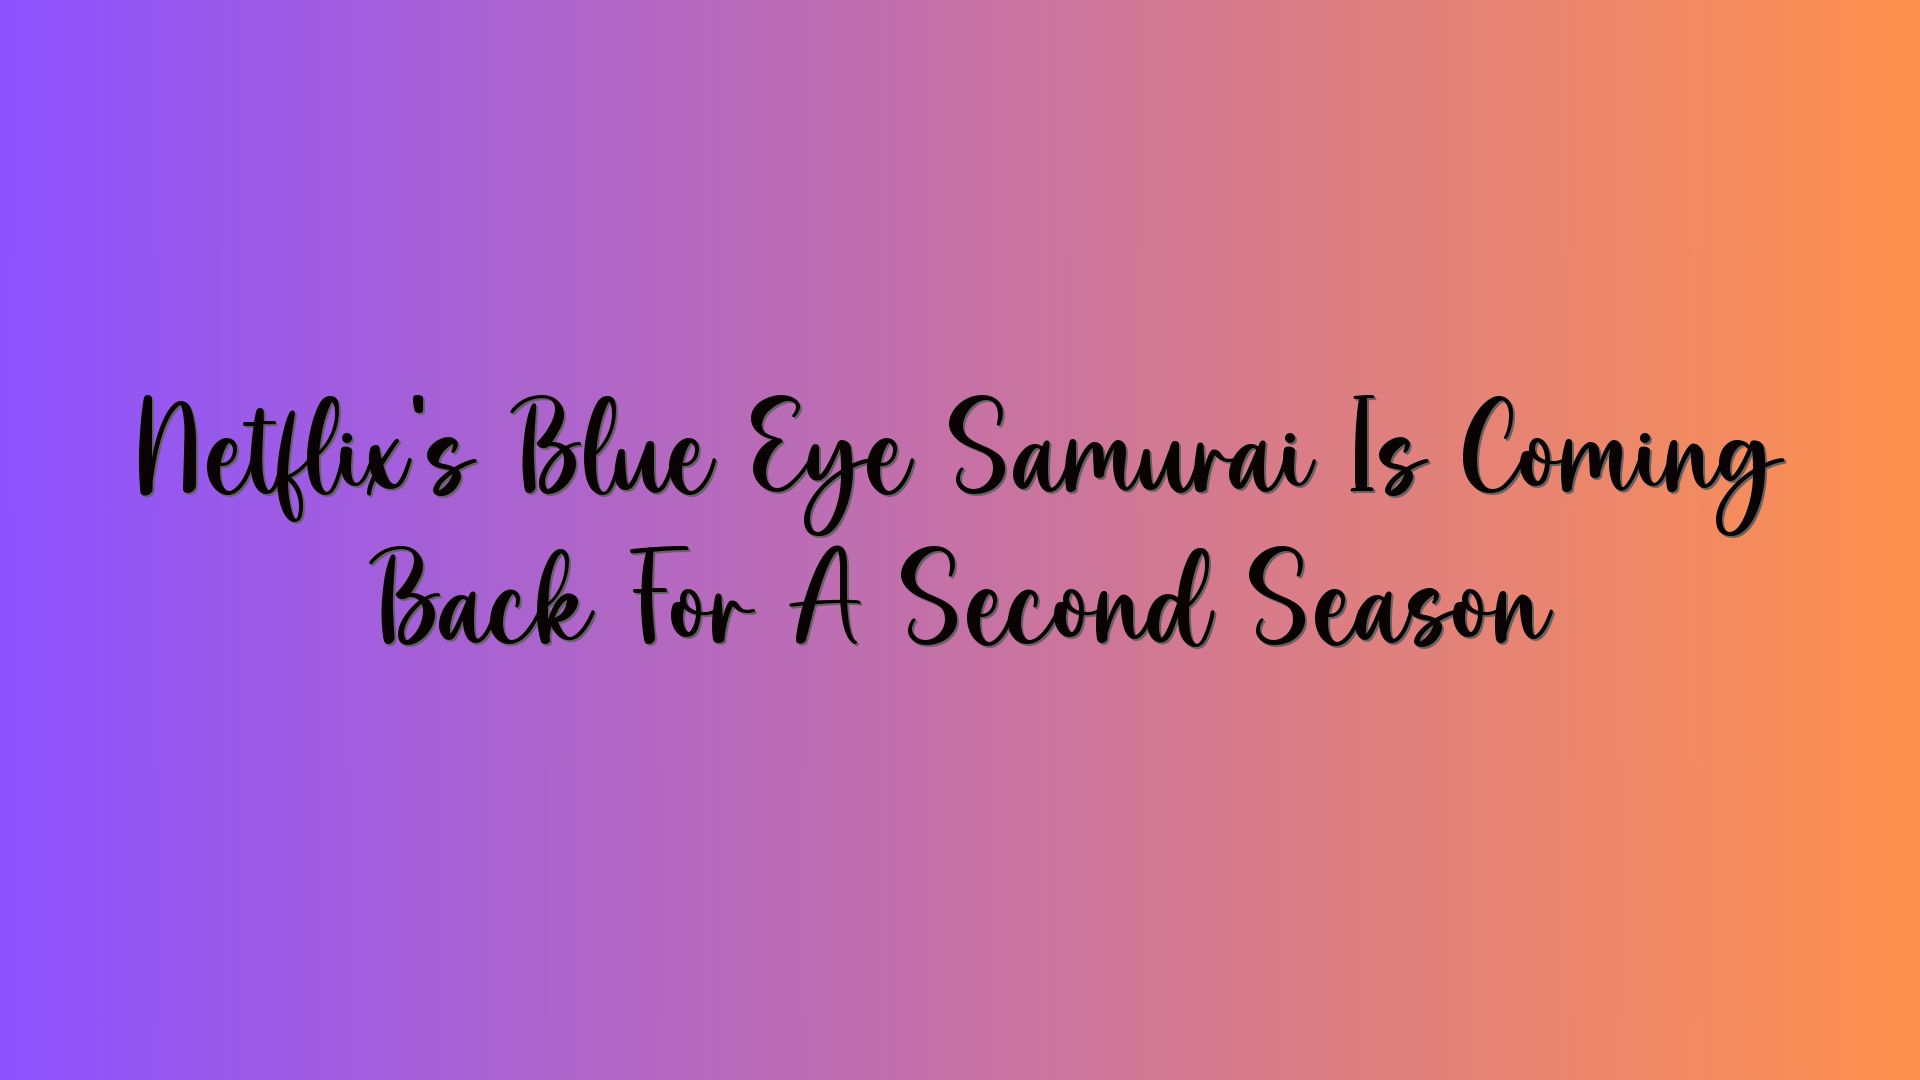 Netflix’s Blue Eye Samurai Is Coming Back For A Second Season